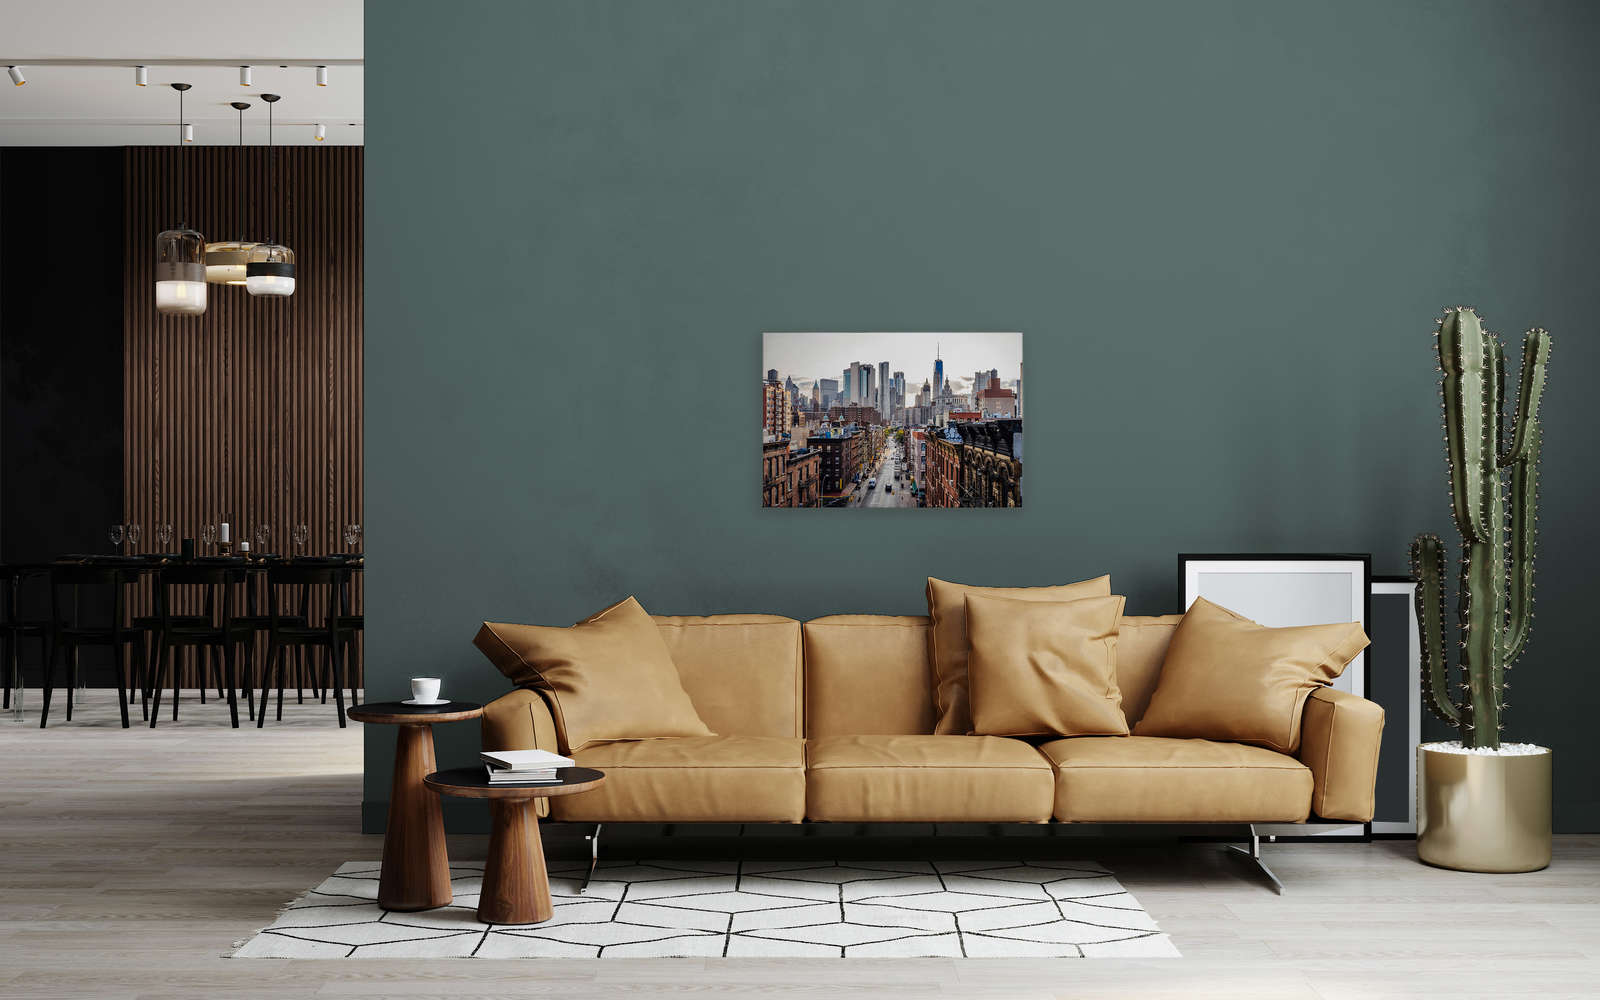             New York Canvas met Skyline - 0,90 m x 0,60 m
        